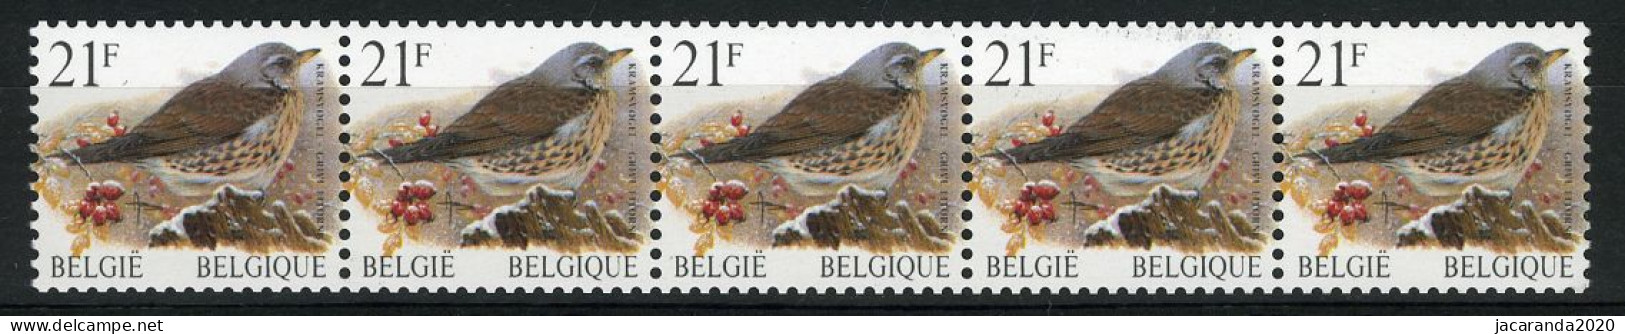 België R89a - Vogels - Oiseaux - Buzin (2792) - 21F - Kramsvogel - Strook Met 4 Cijfers - Bande Avec 4 Chiffres - Rollen